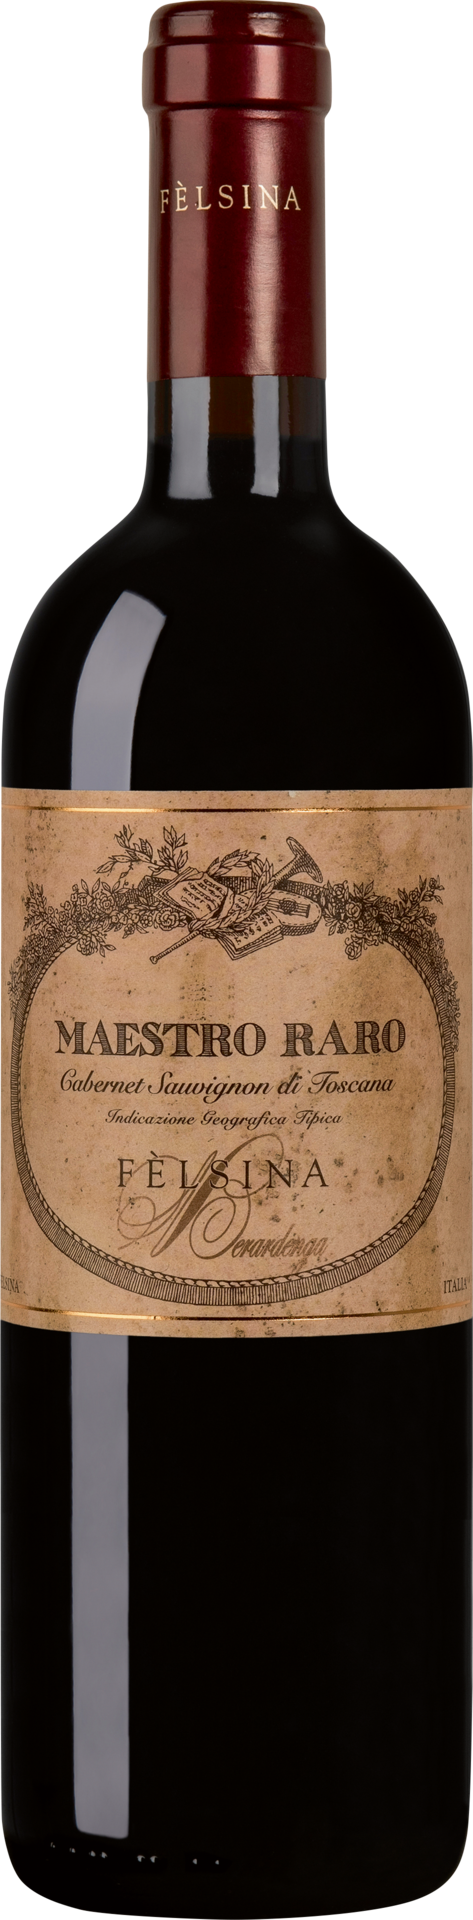 Felsina Maestro Raro - 2019